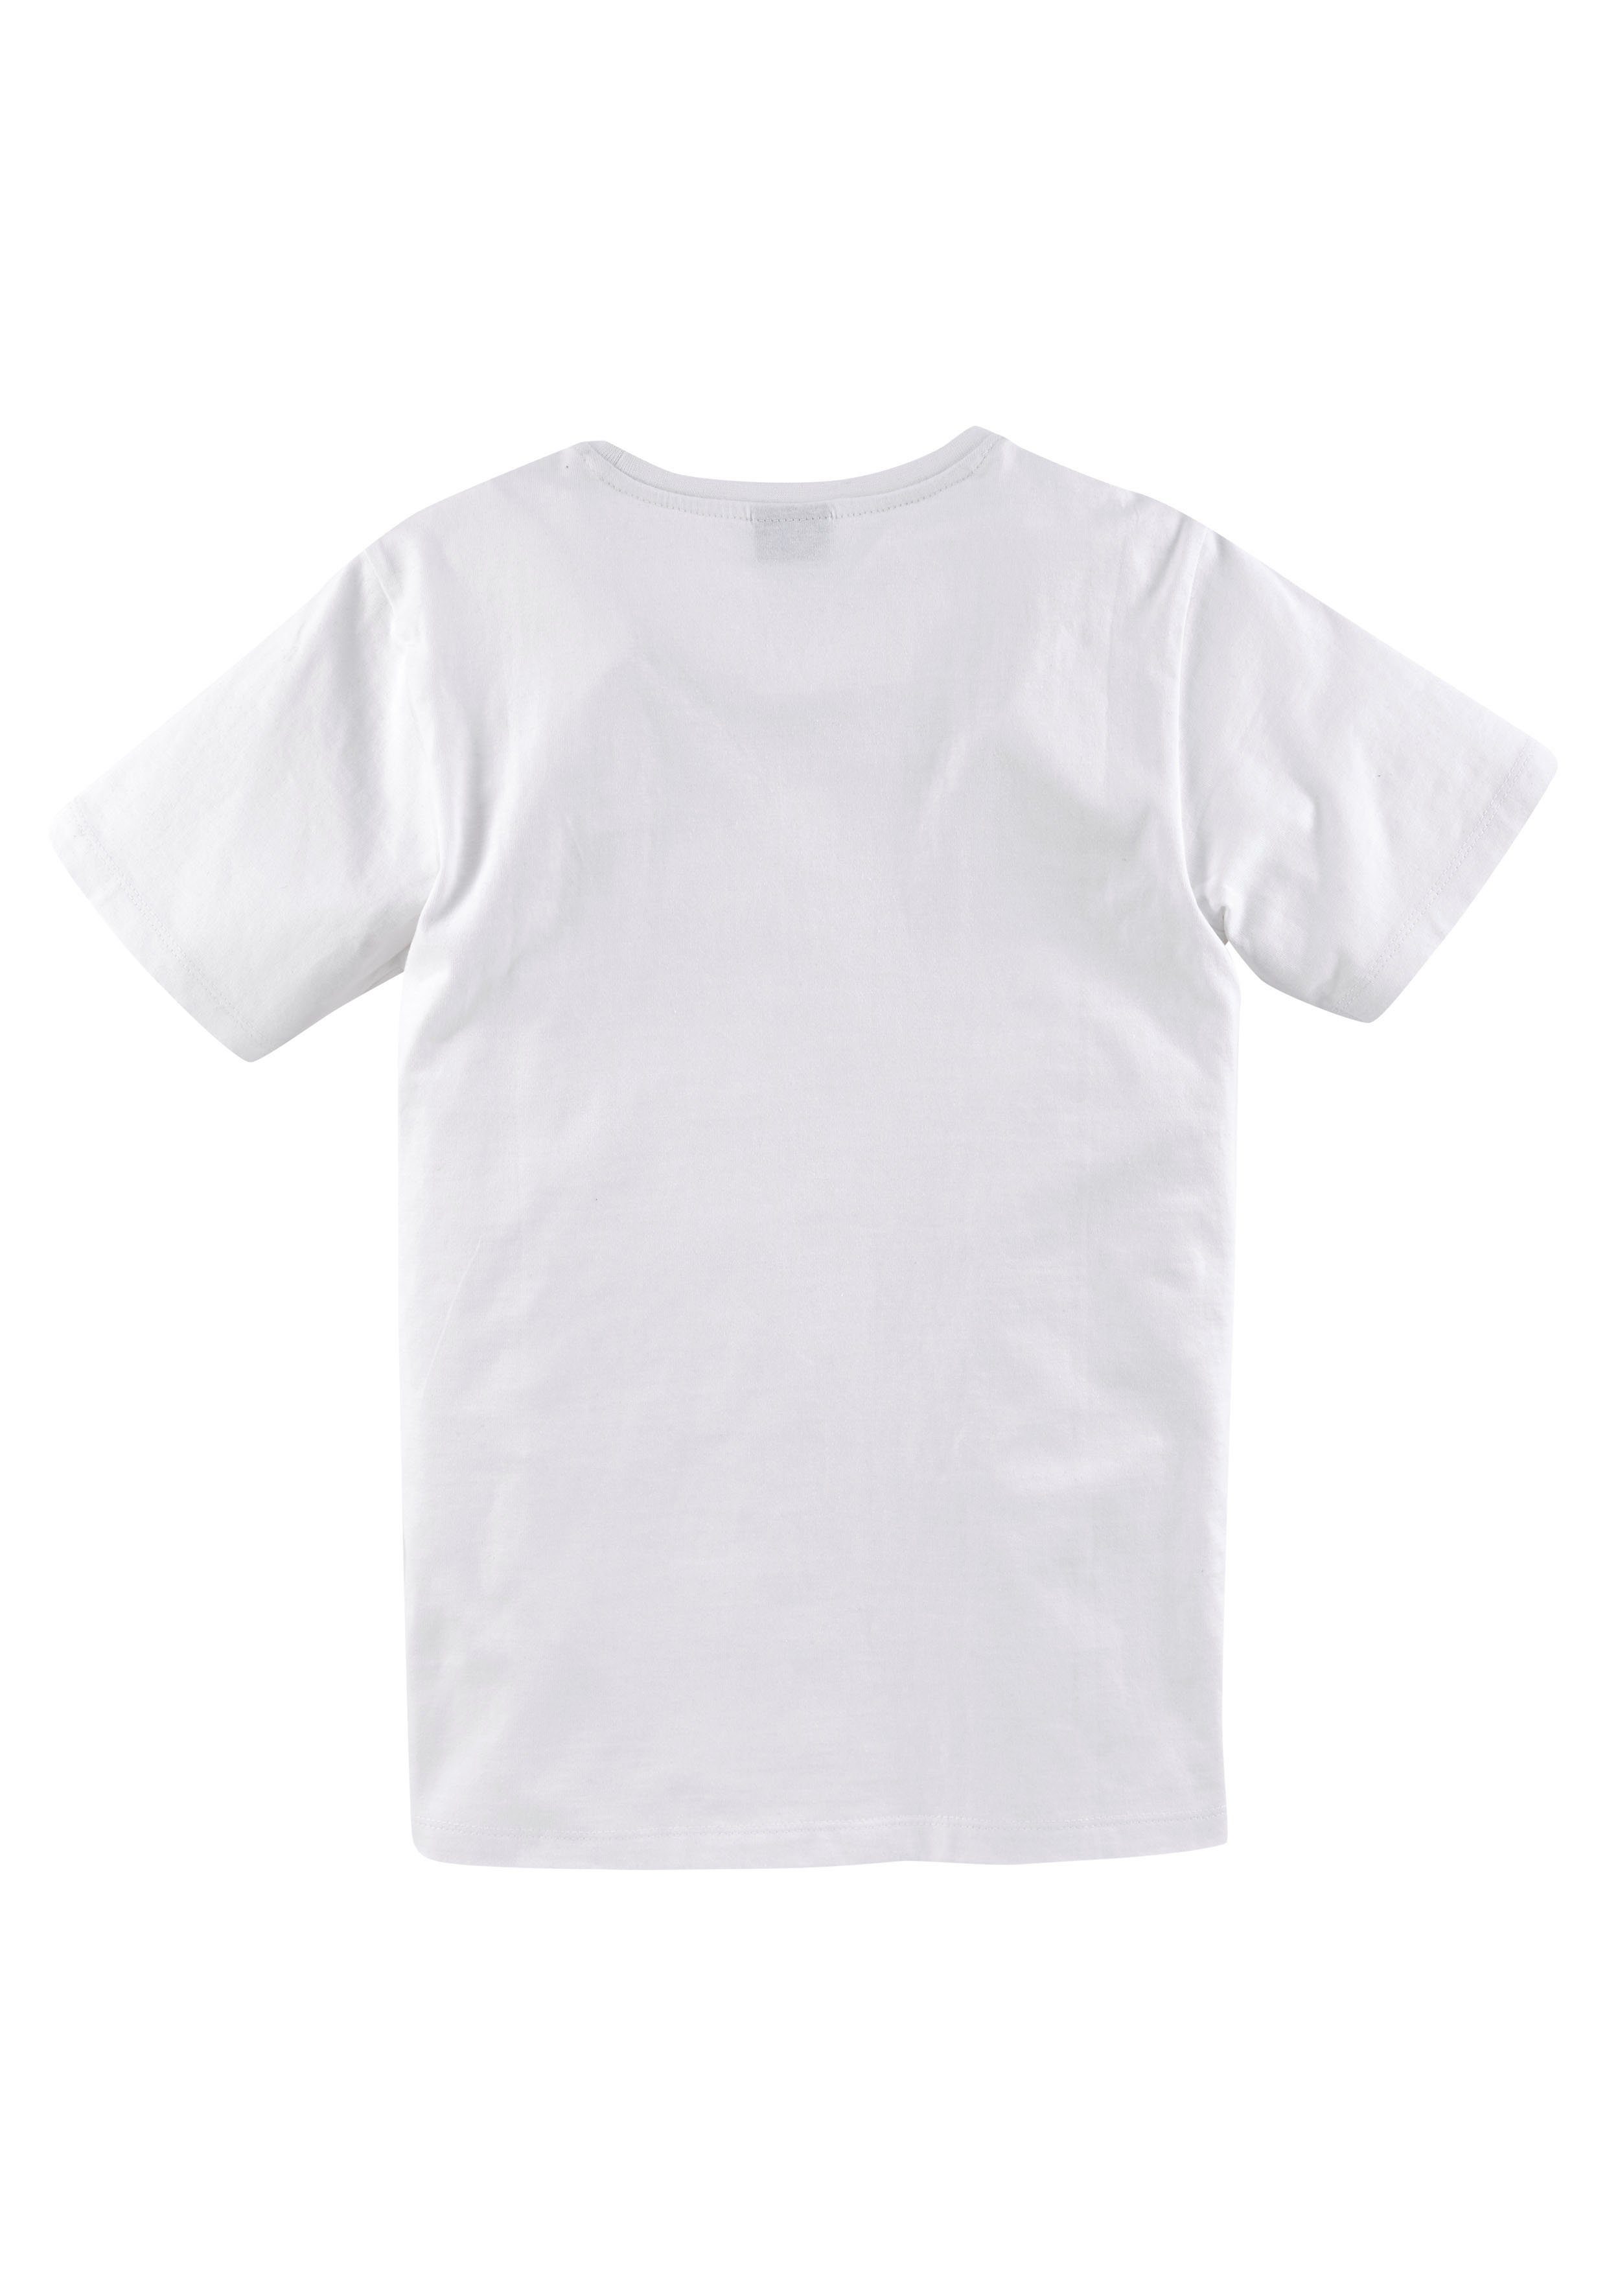 ZONE, Spruch GAMING KIDSWORLD T-Shirt